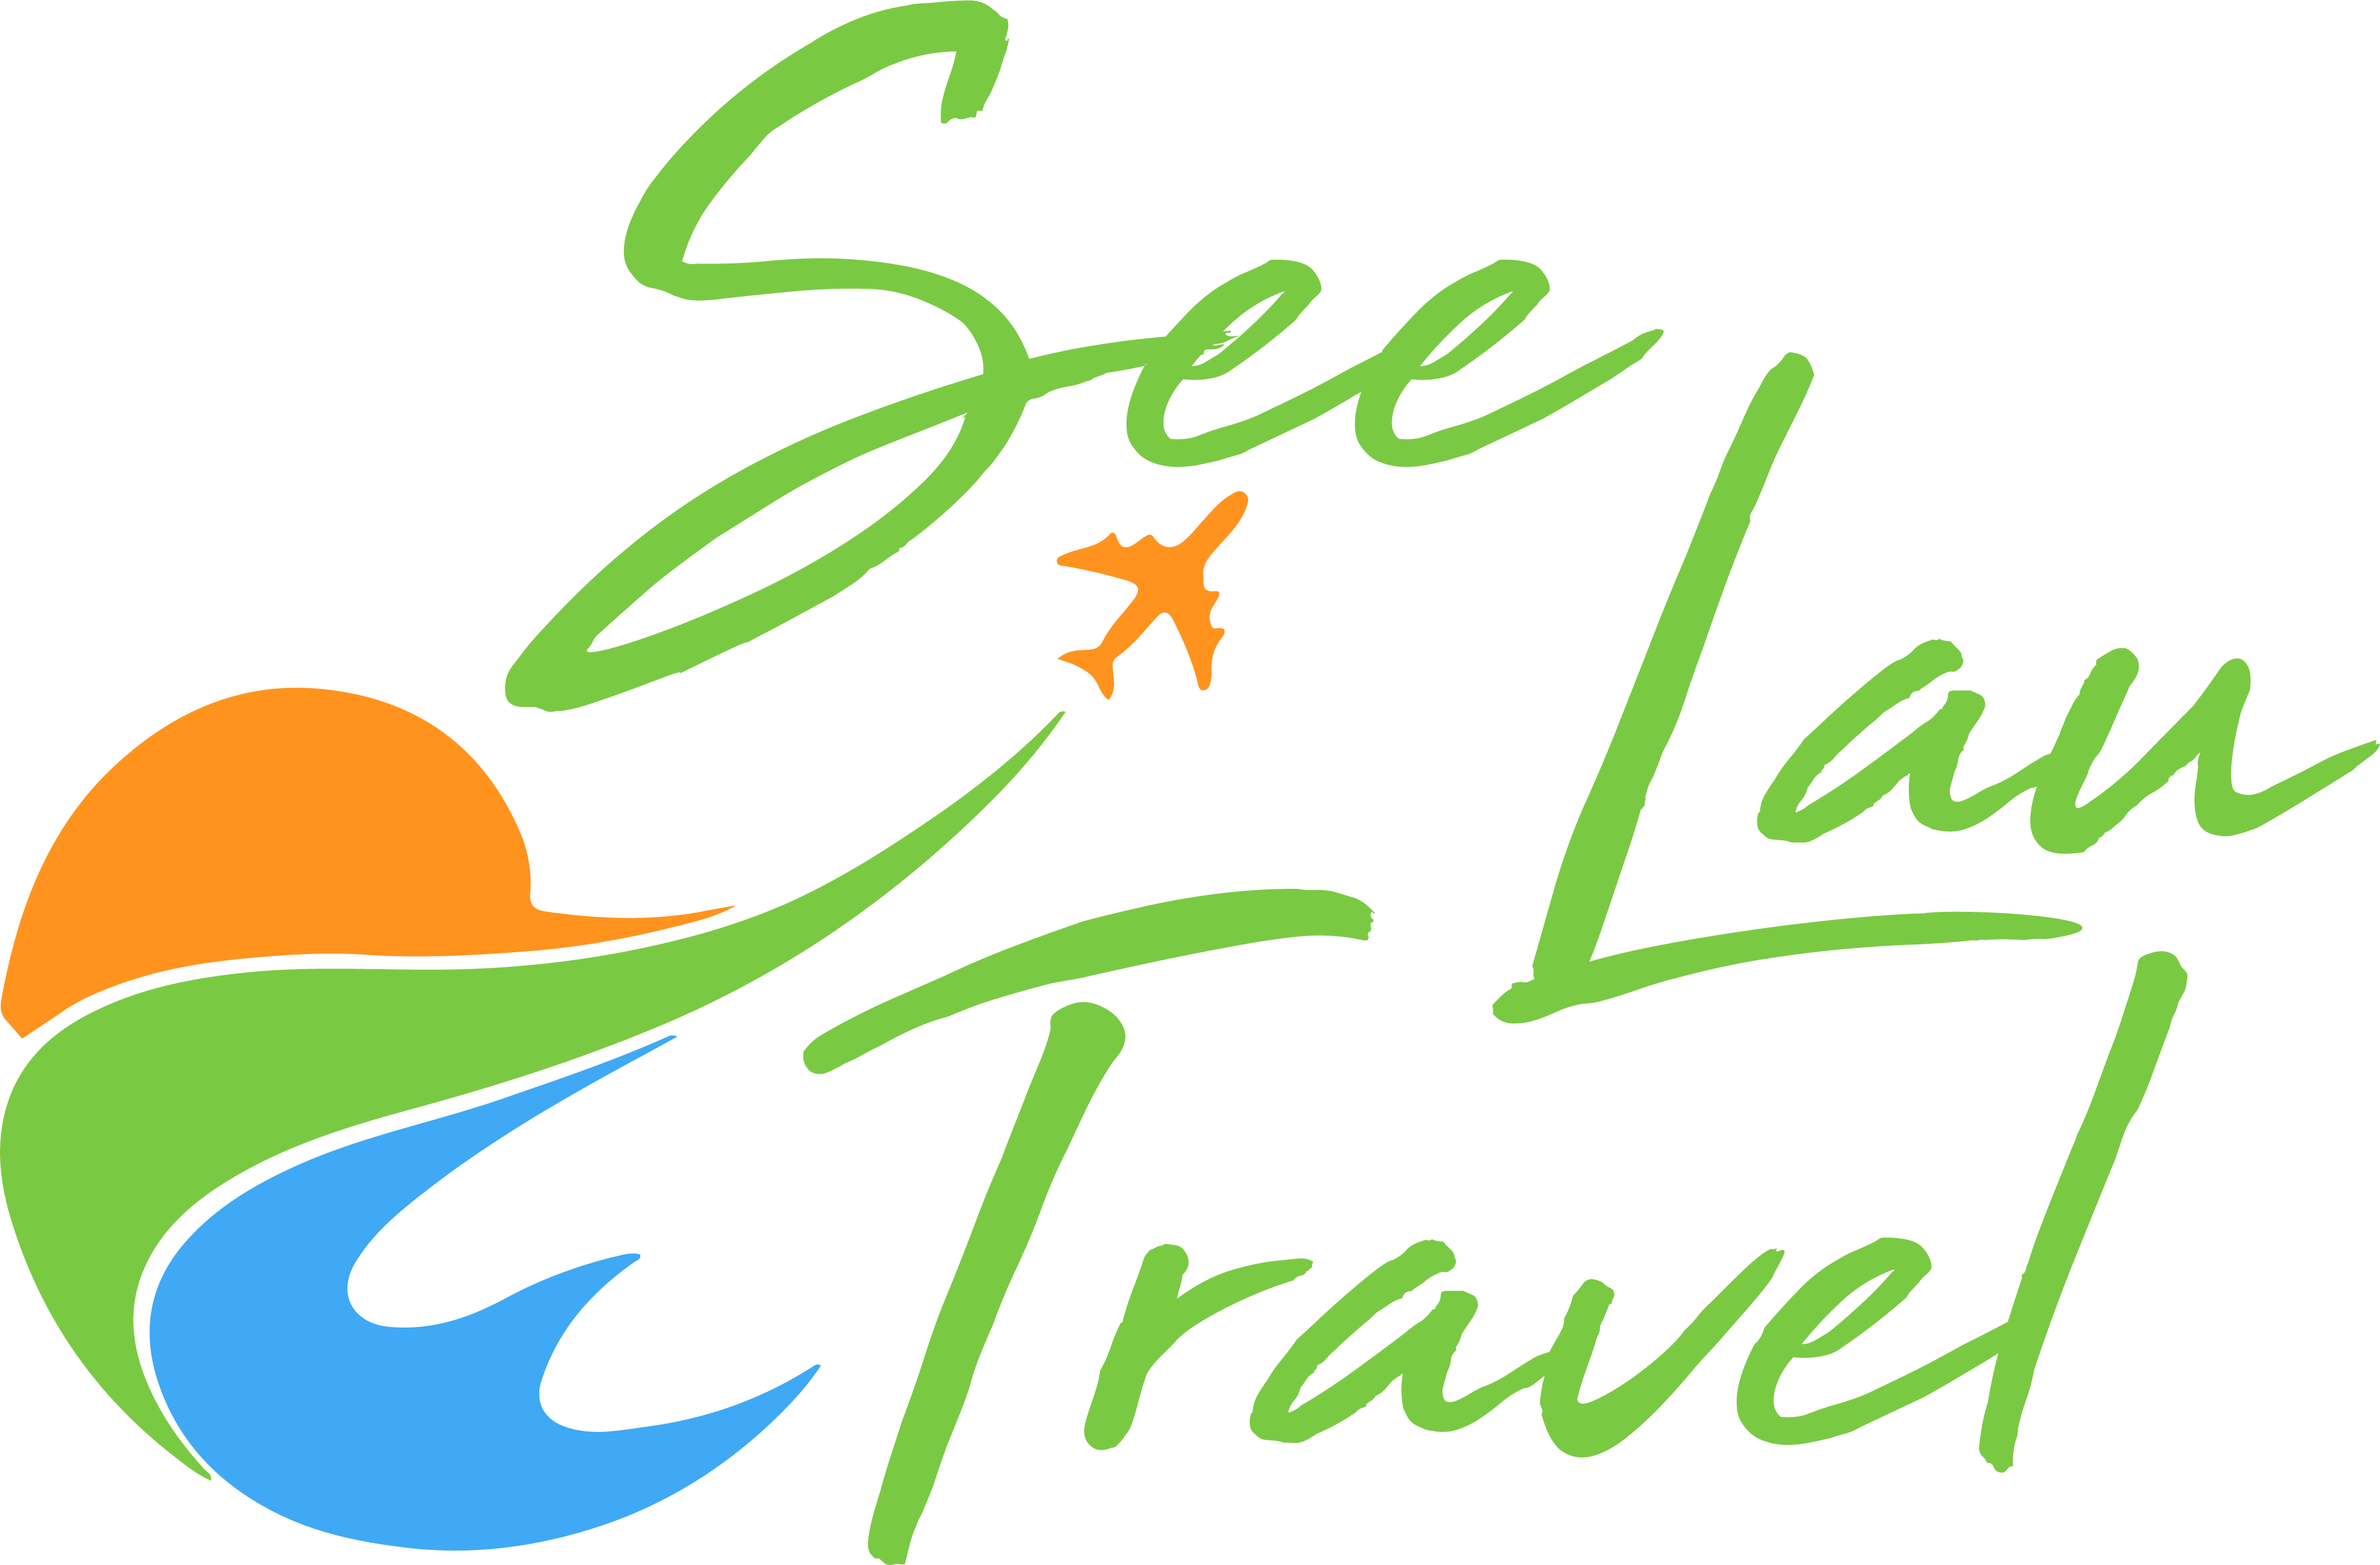 Seelau travels – Sales Mentor Program